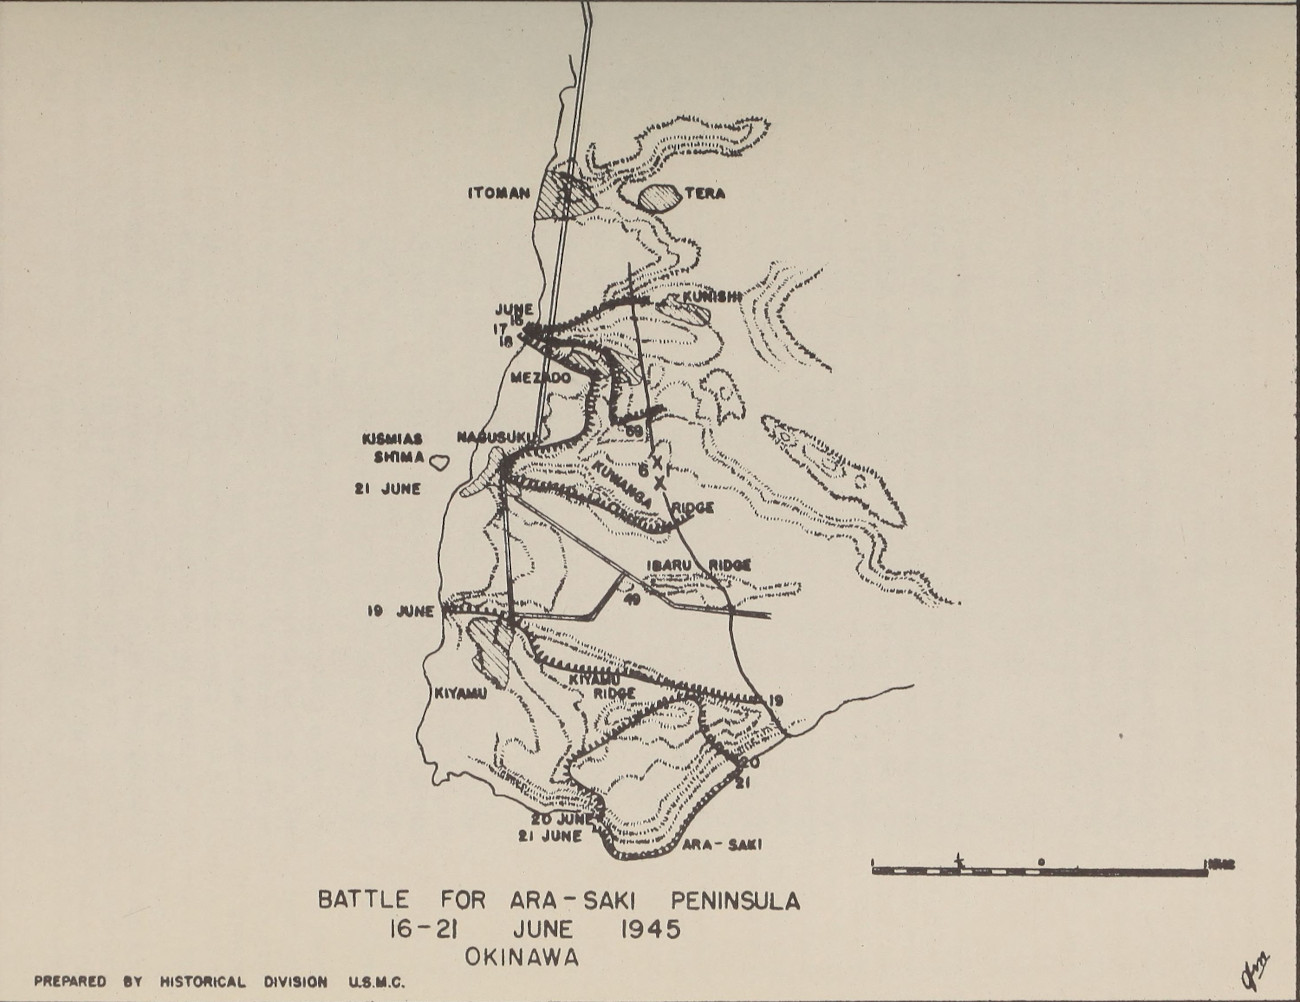 Map 13. Battle for Ara-Saki Peninsula.